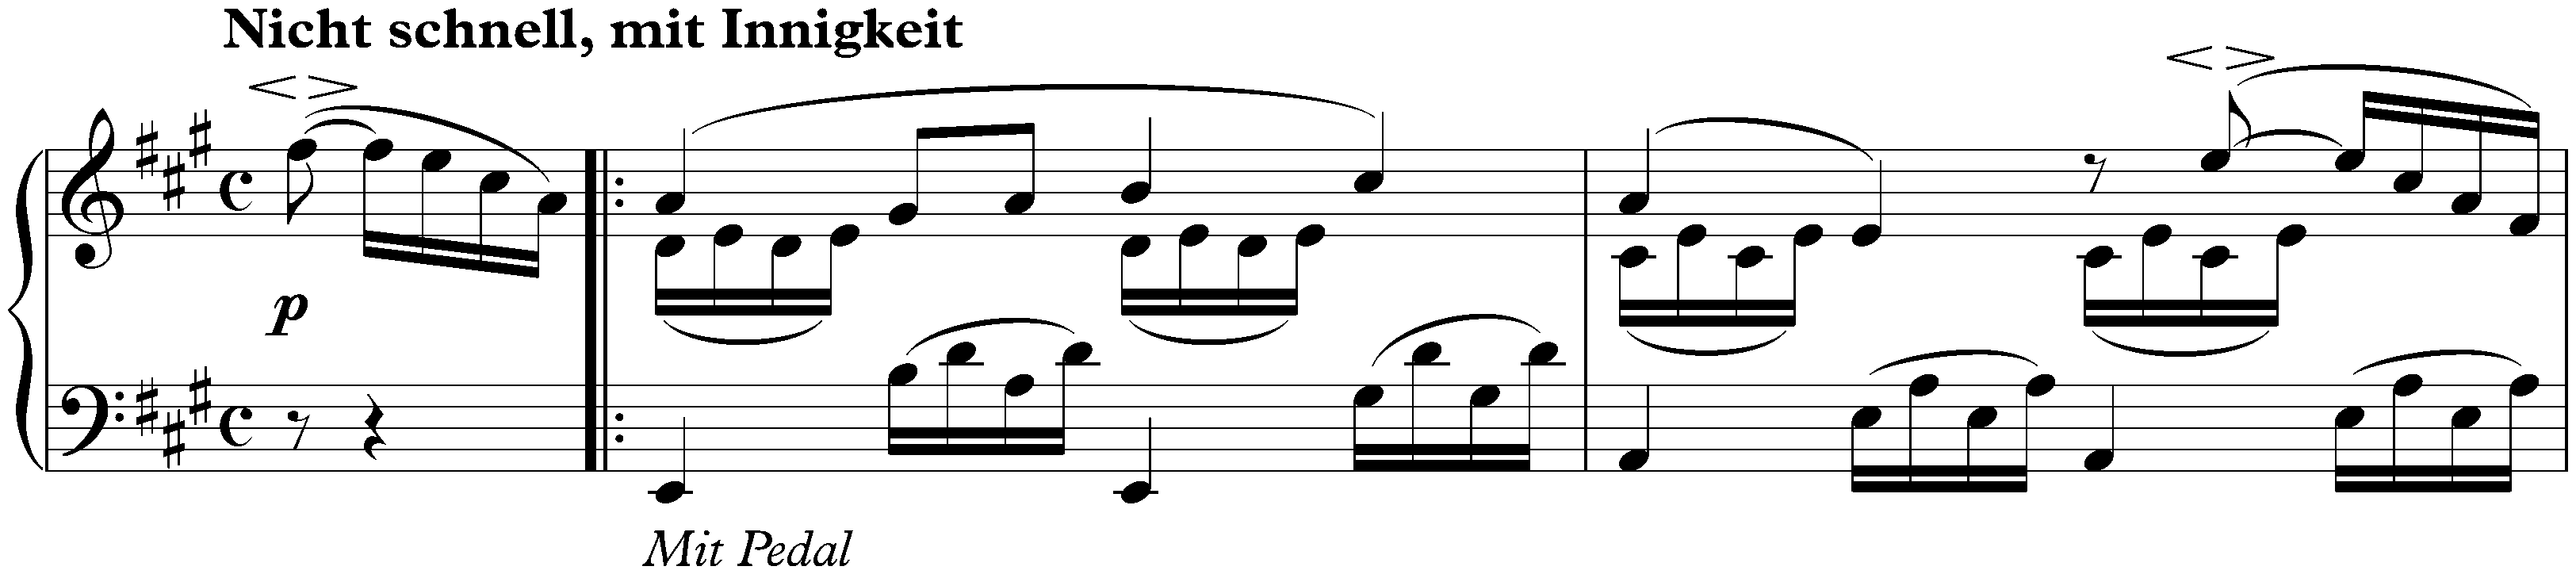 Bunte Blätter, op. 99; 1. Drei Stücklein, no. 1